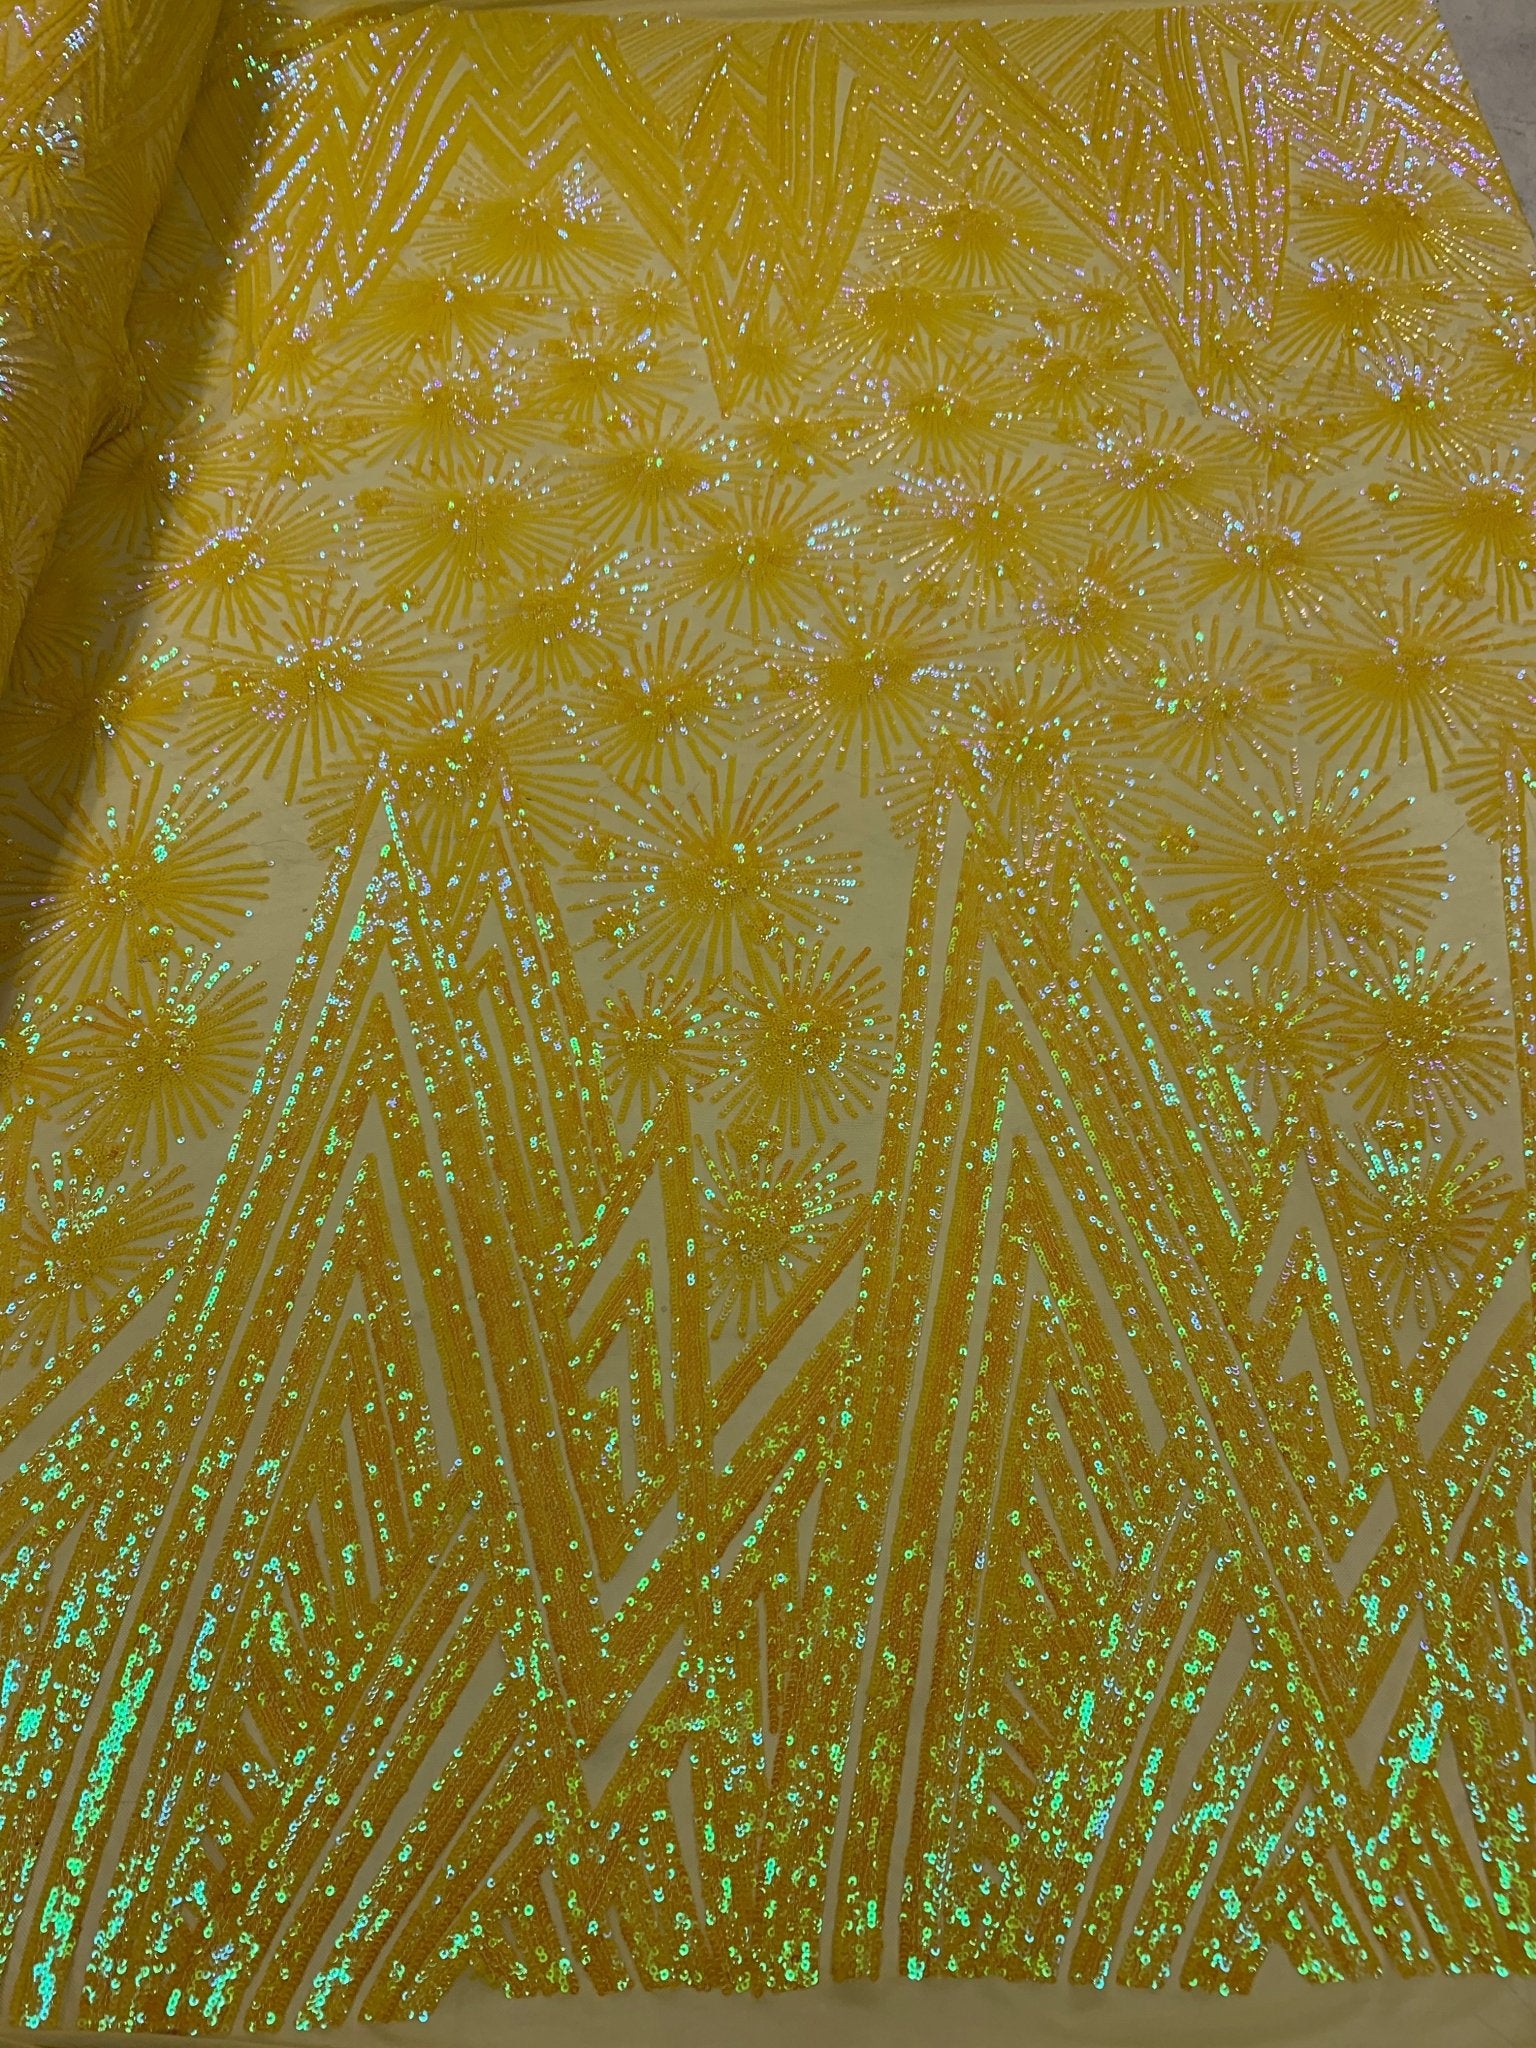 4 Way Stretch Iridescent Geometric Sequin Embroidered Mesh Lace FabricICEFABRICICE FABRICSYellow IridescentBy The Yard (58" Wide)4 Way Stretch Iridescent Geometric Sequin Embroidered Mesh Lace Fabric ICEFABRIC |Yellow Iridescent